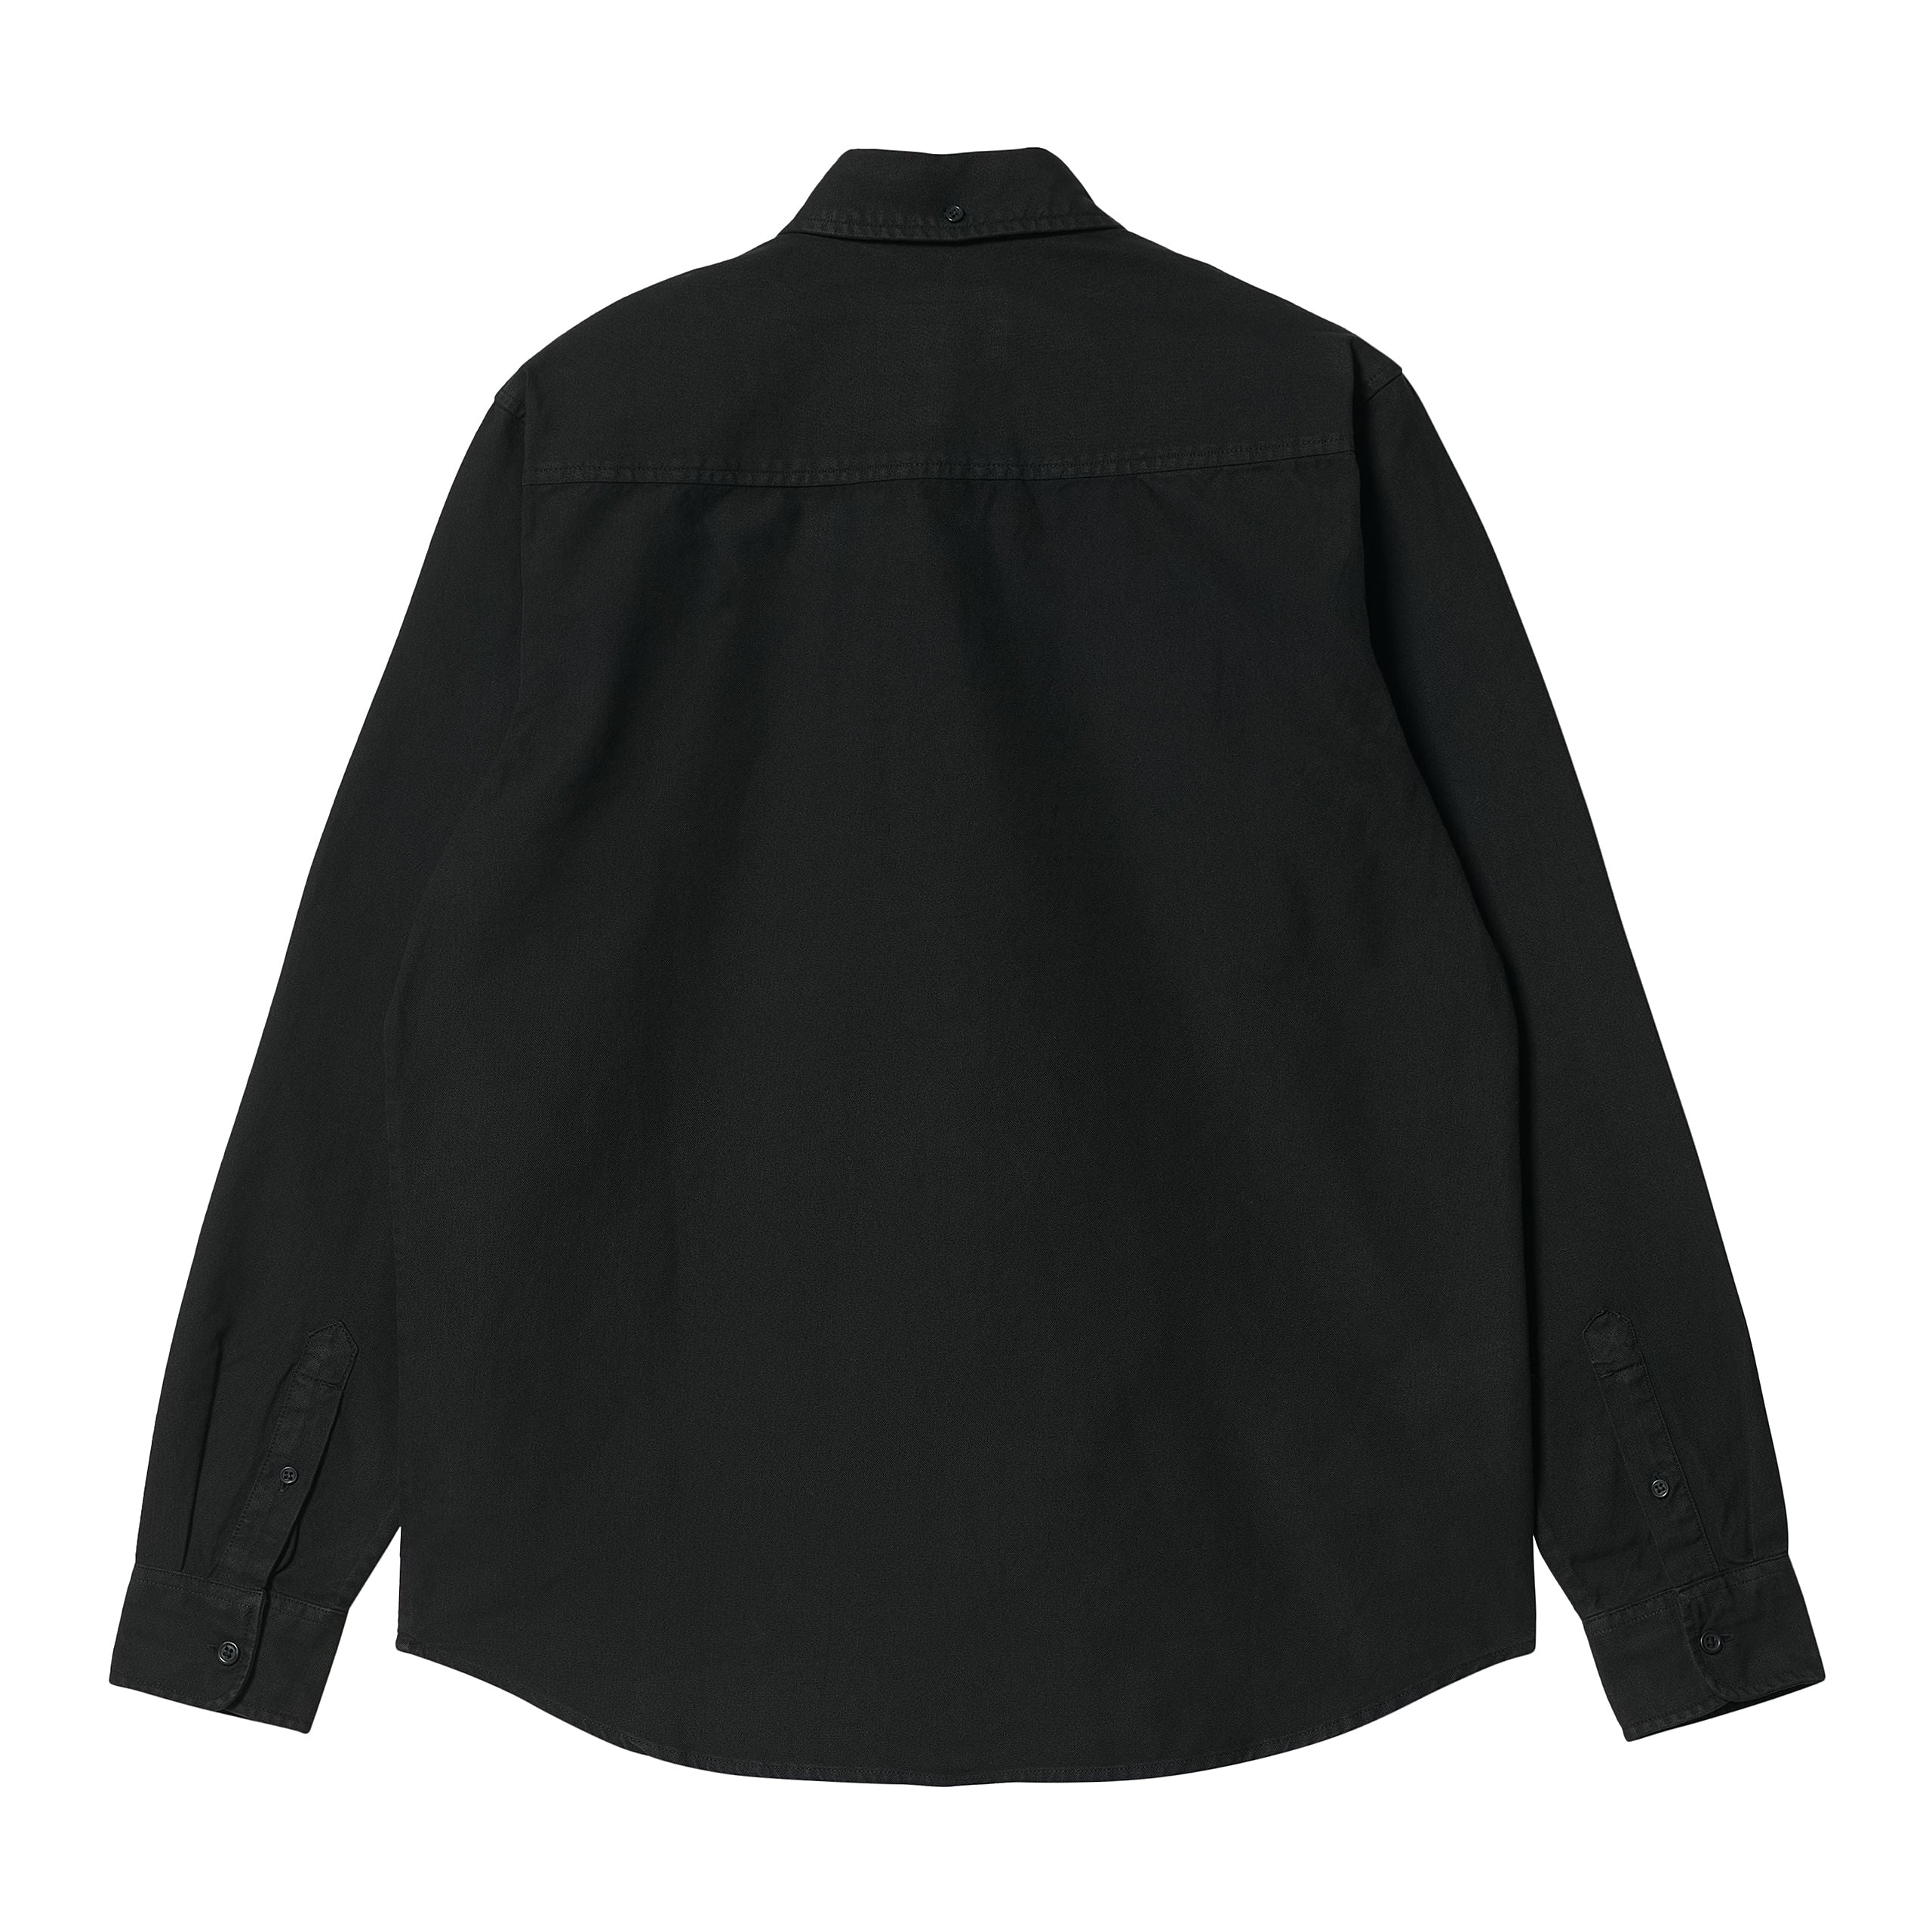 Carhartt WIP Bolton Shirt - Black Rinsed